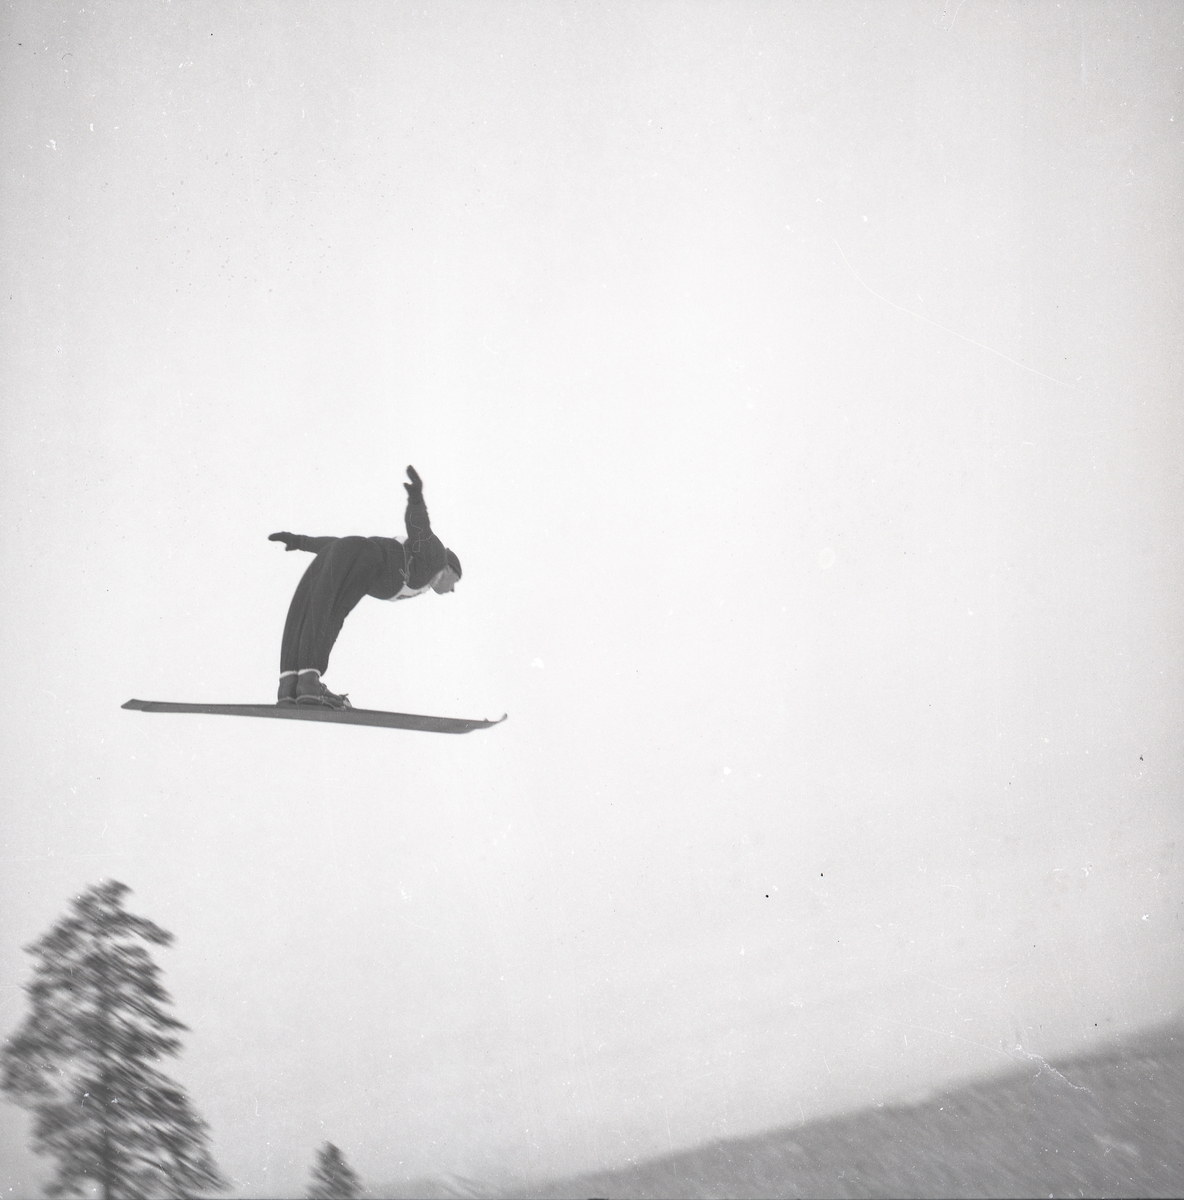 Kongsberg skier in action